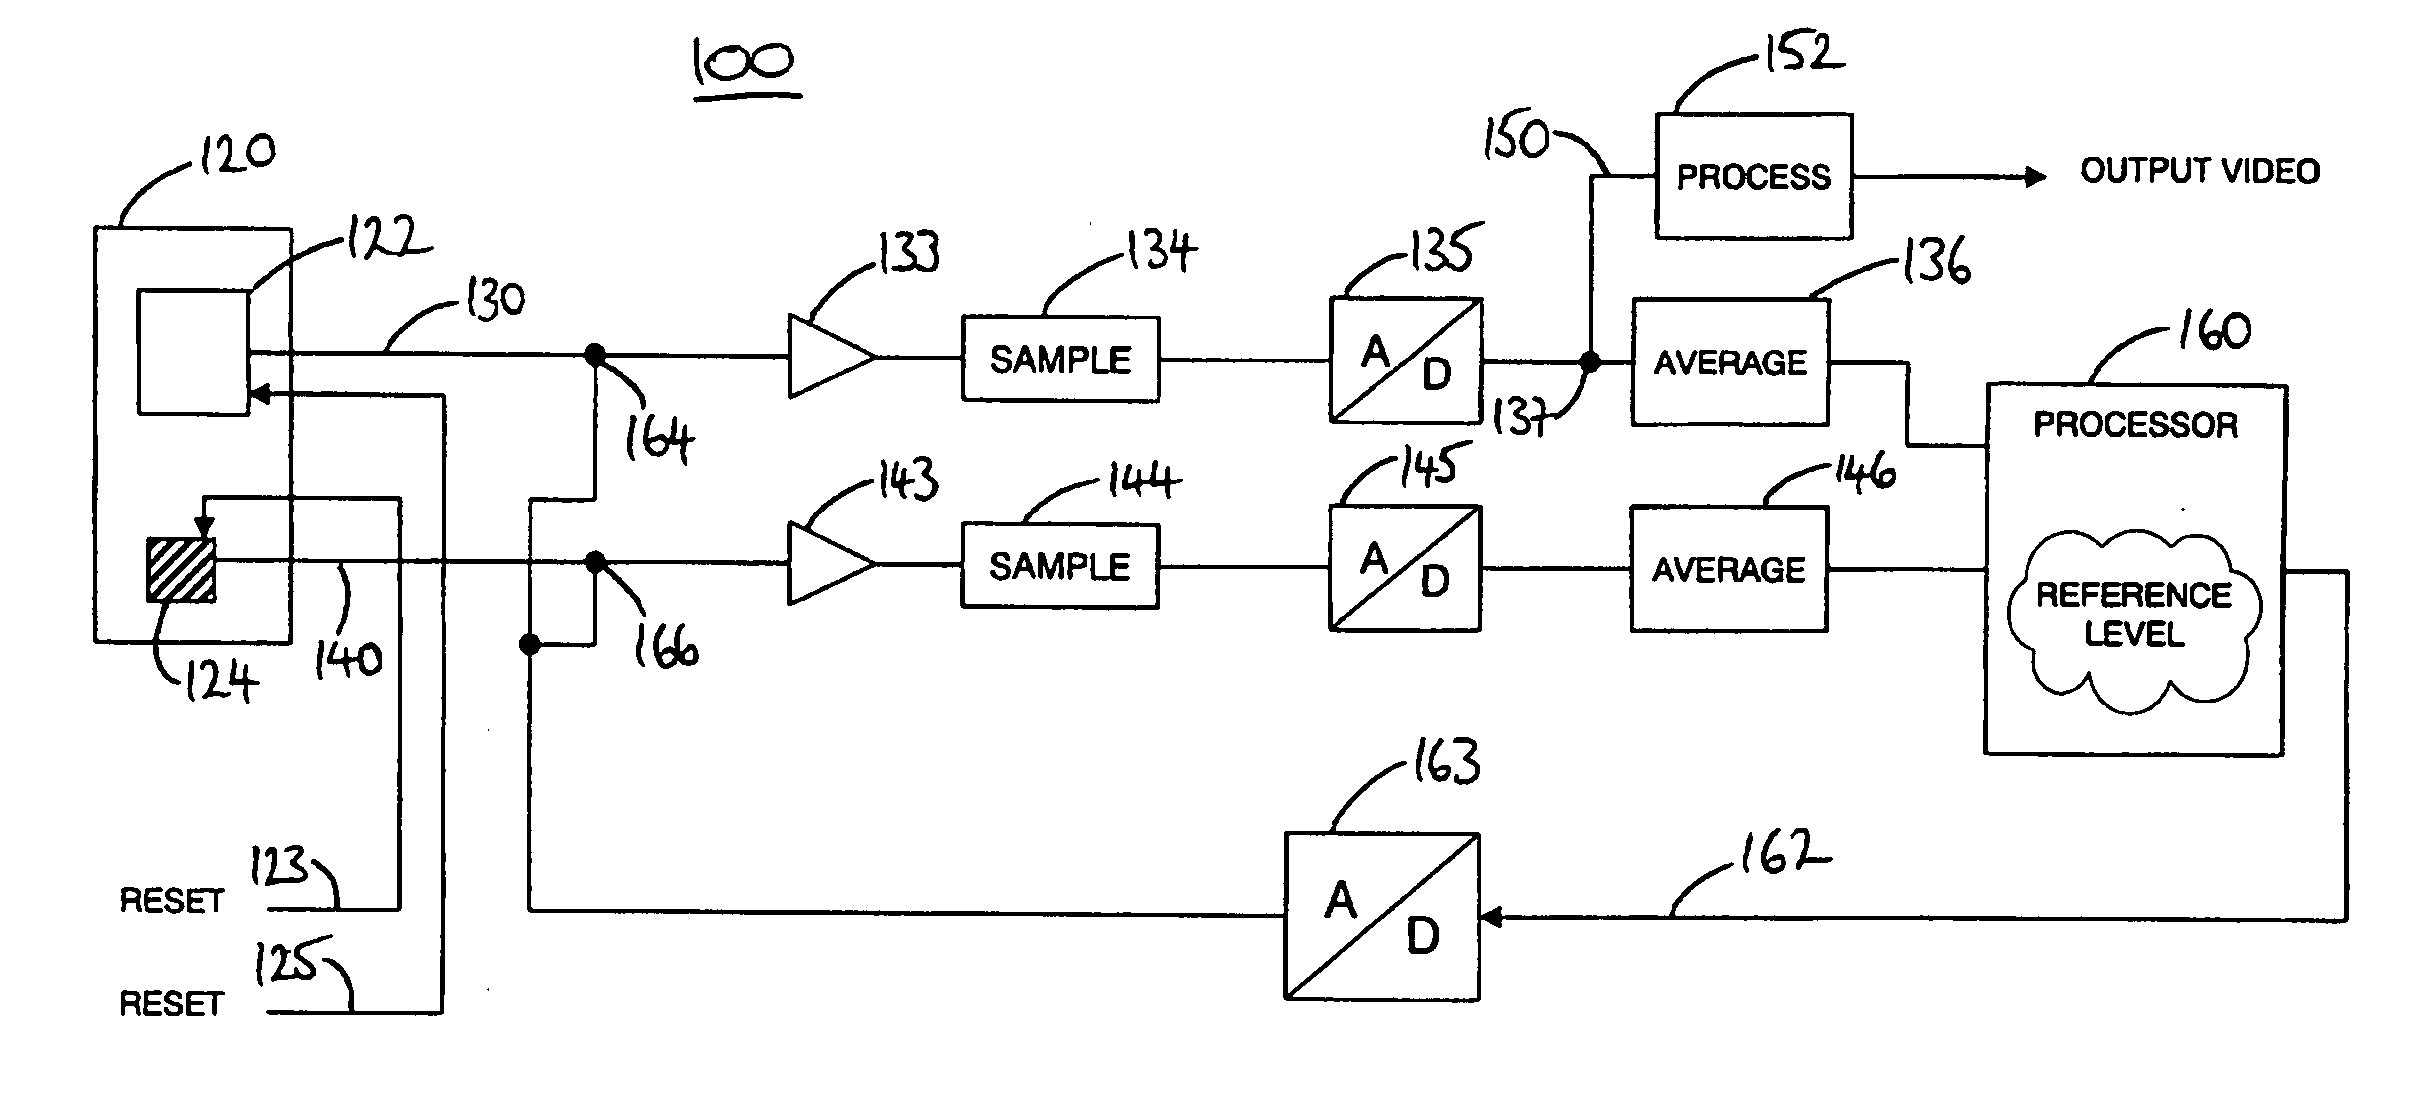 Black level control apparatus and method